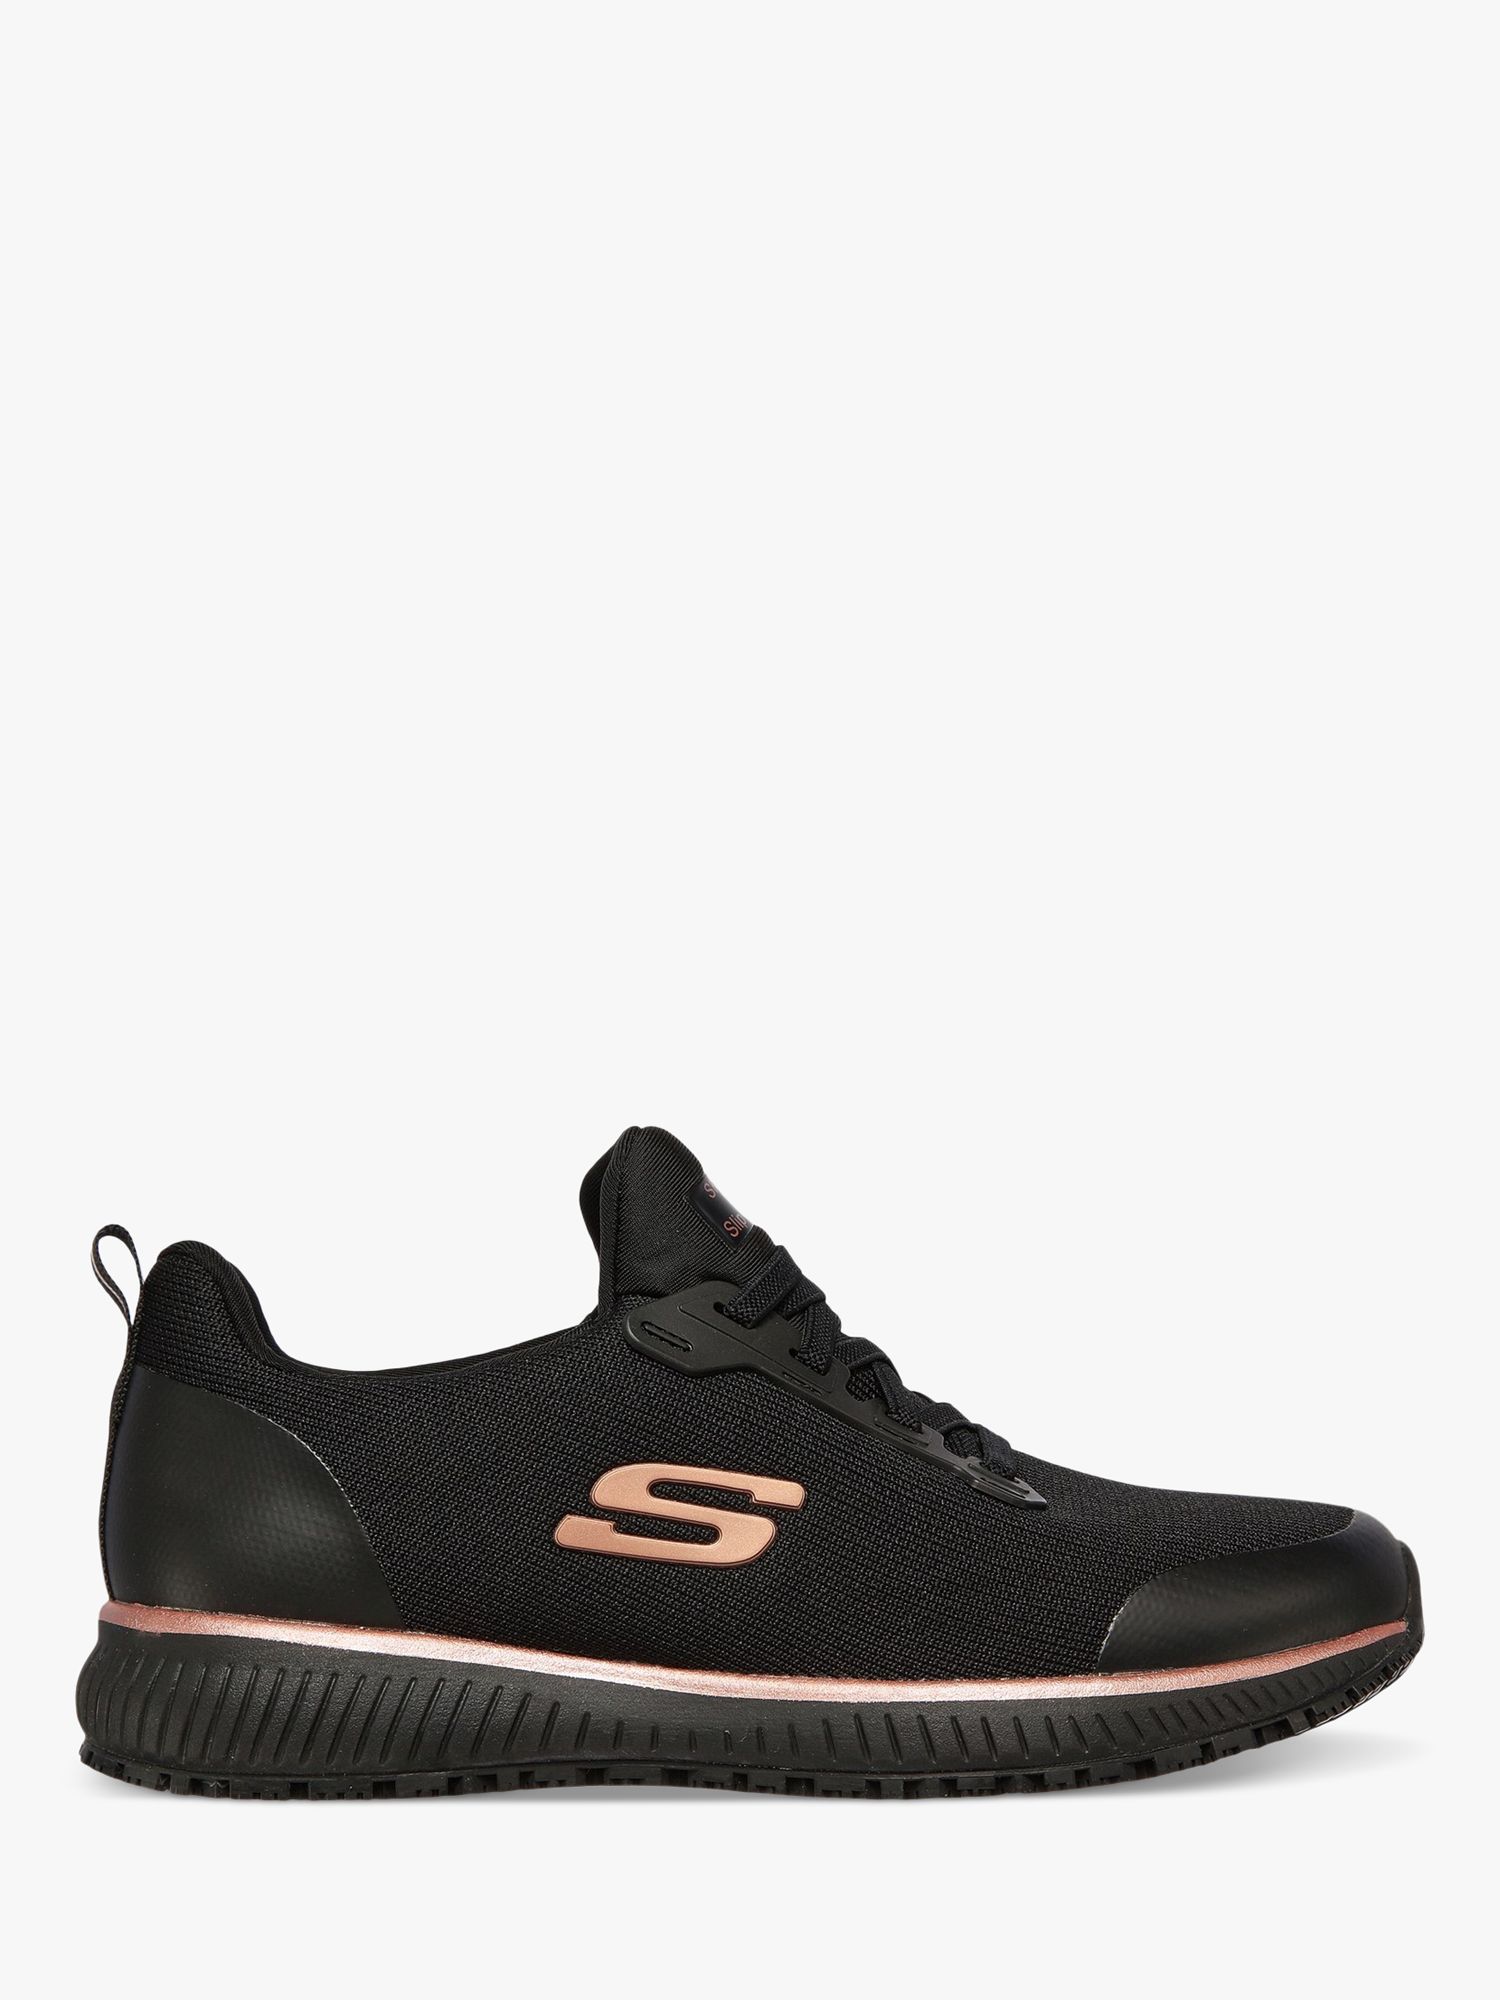 Skechers Squad SR Occupational Shoes, Black at John Lewis & Partners